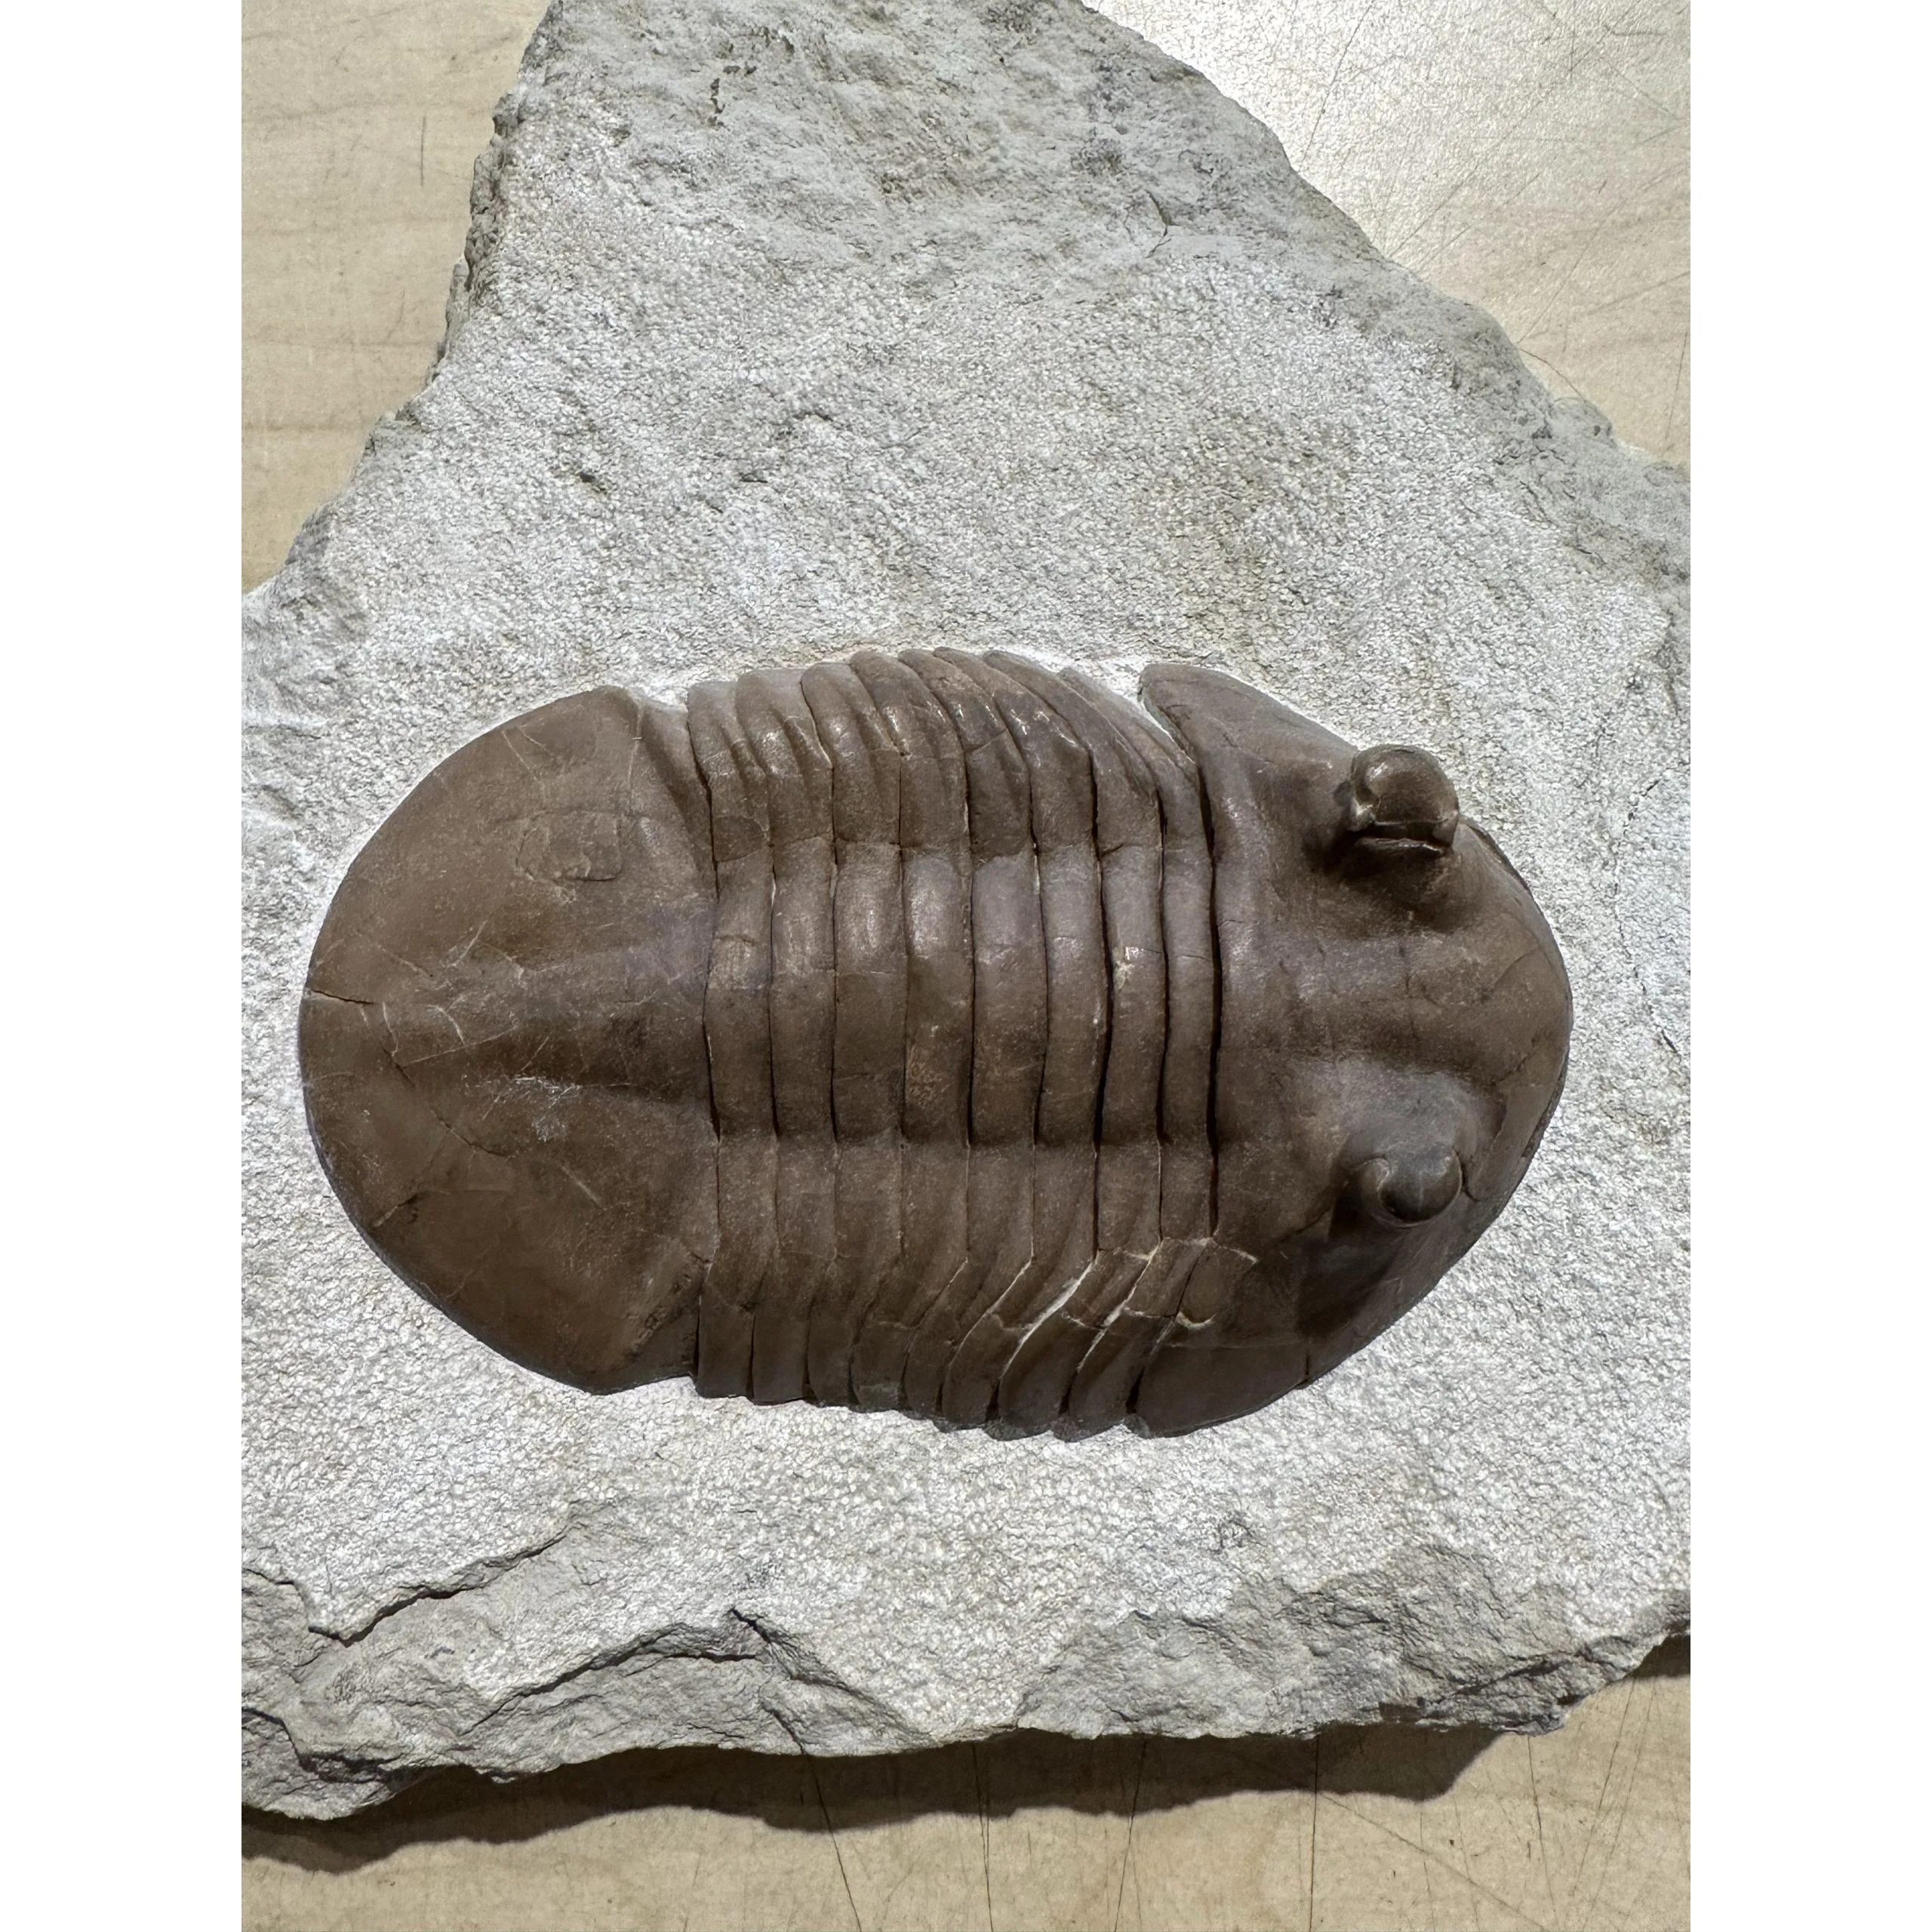 Asaphus from Russia, Trilobite Prehistoric Online